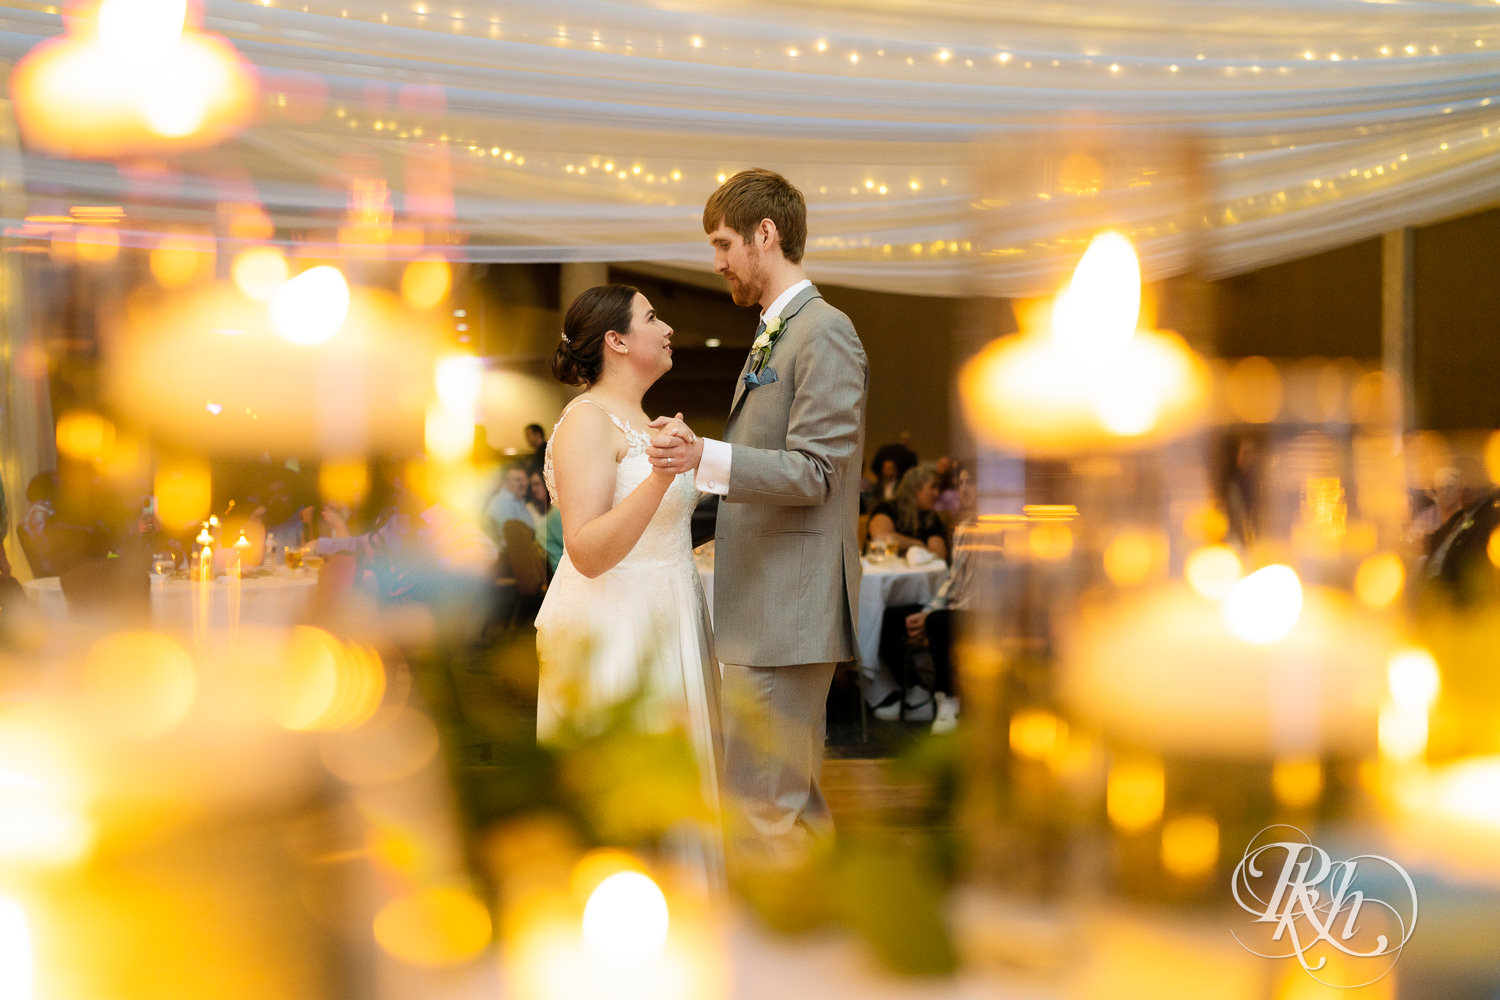 Bride and groom share first dance at Doubletree Hilton Saint Paul in Saint Paul, Minnesota.